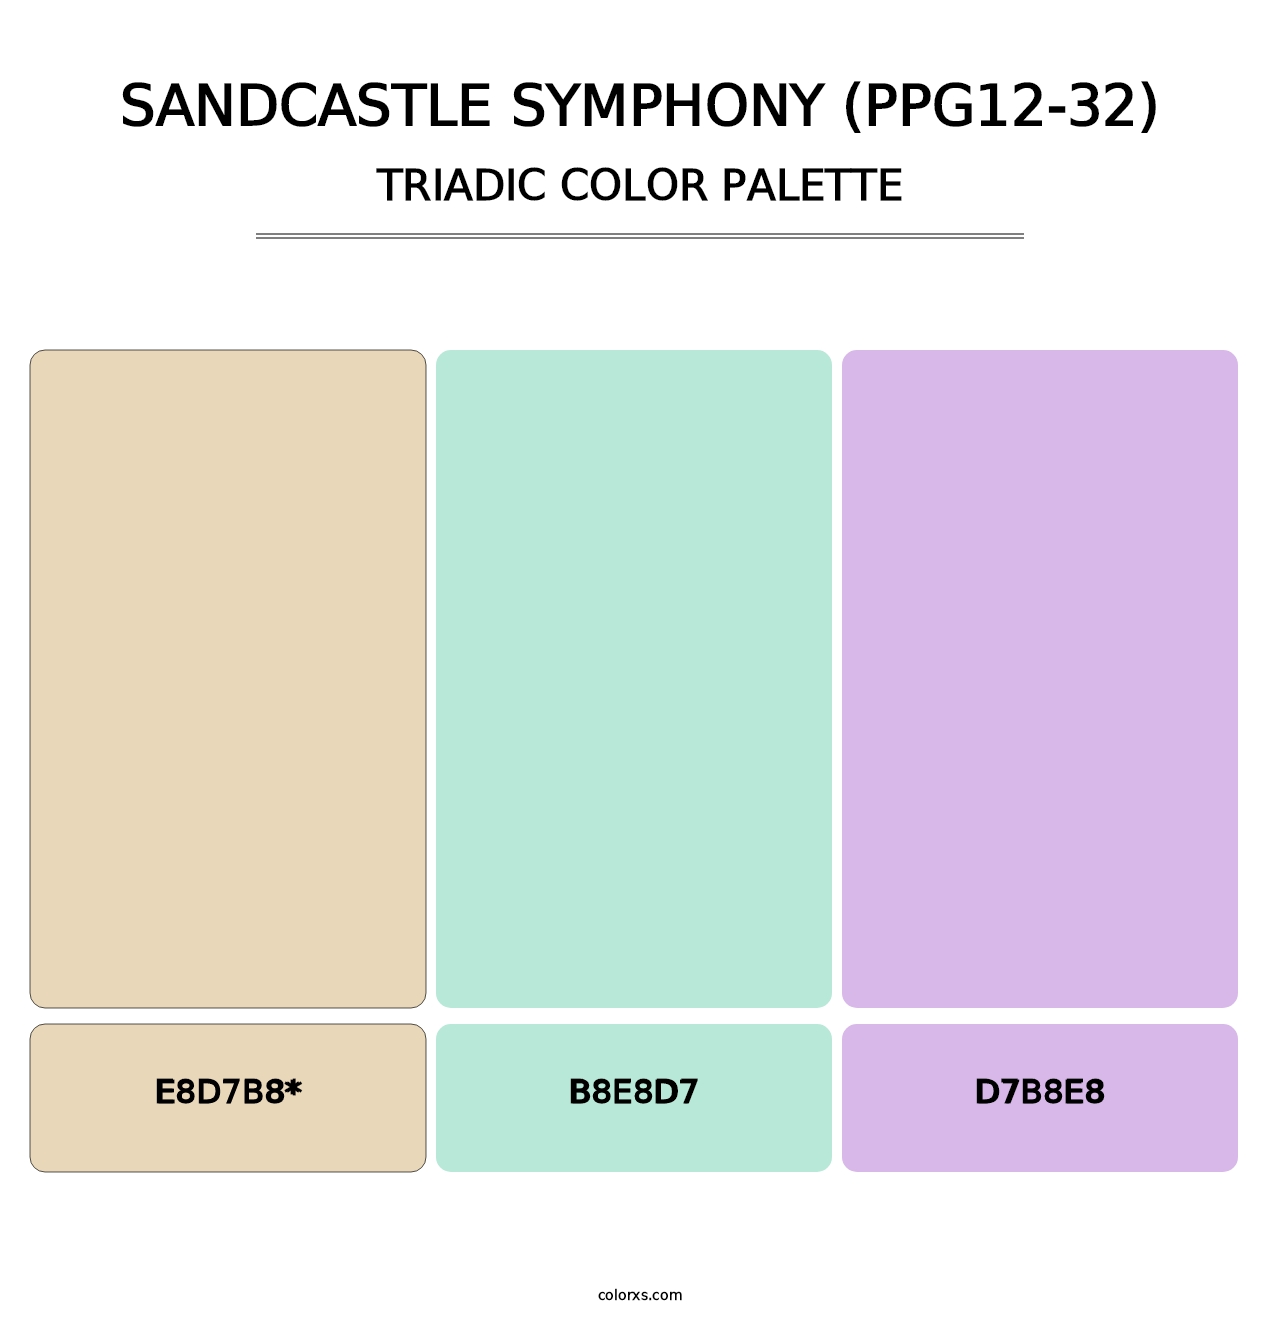 Sandcastle Symphony (PPG12-32) - Triadic Color Palette